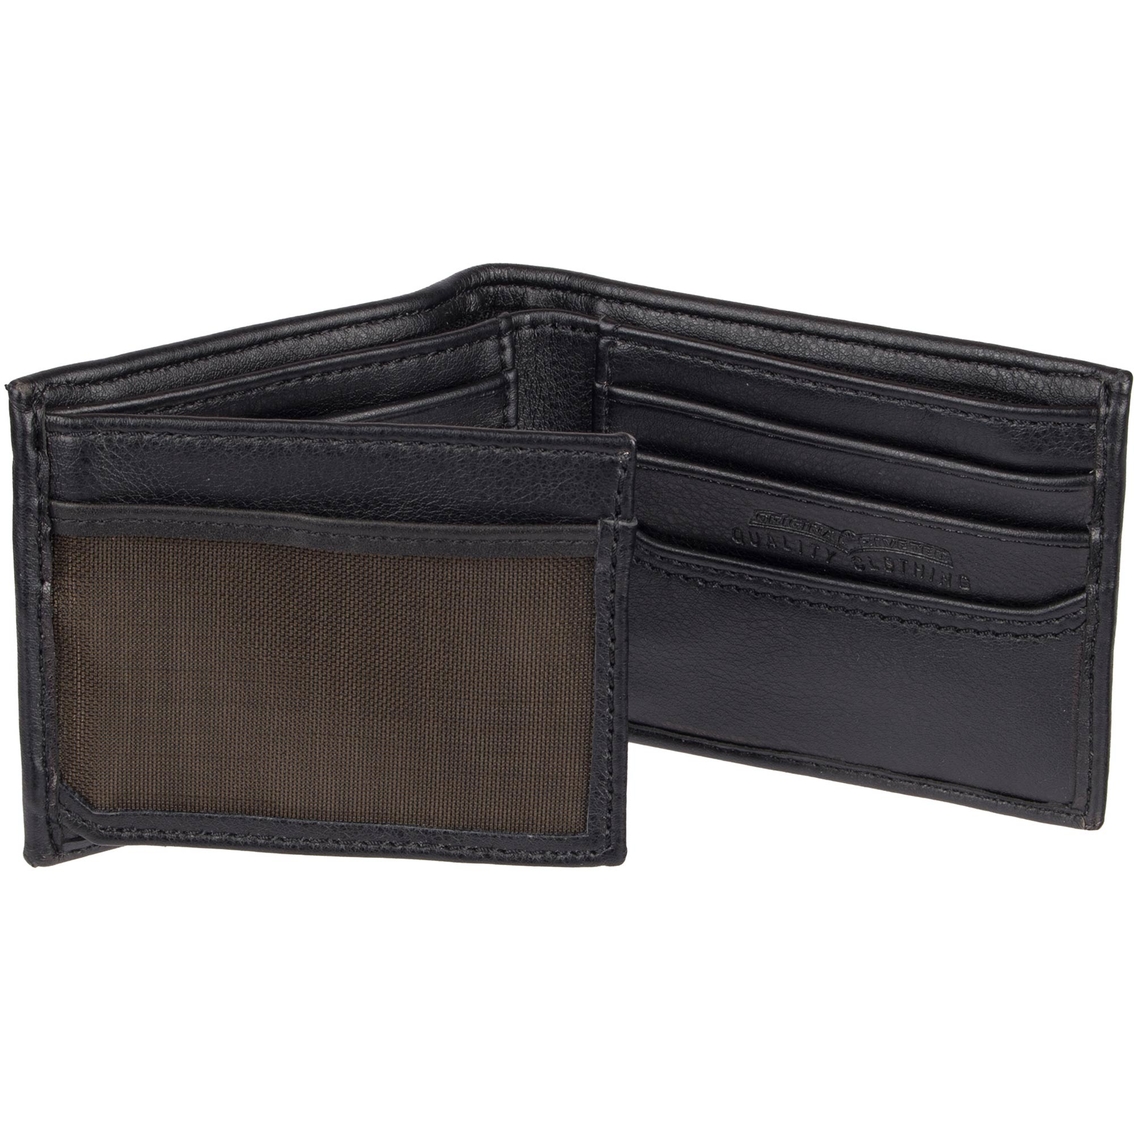 Levi's RFID Extra Capacity Traveler Wallet with Zipper Pocket - Image 2 of 5